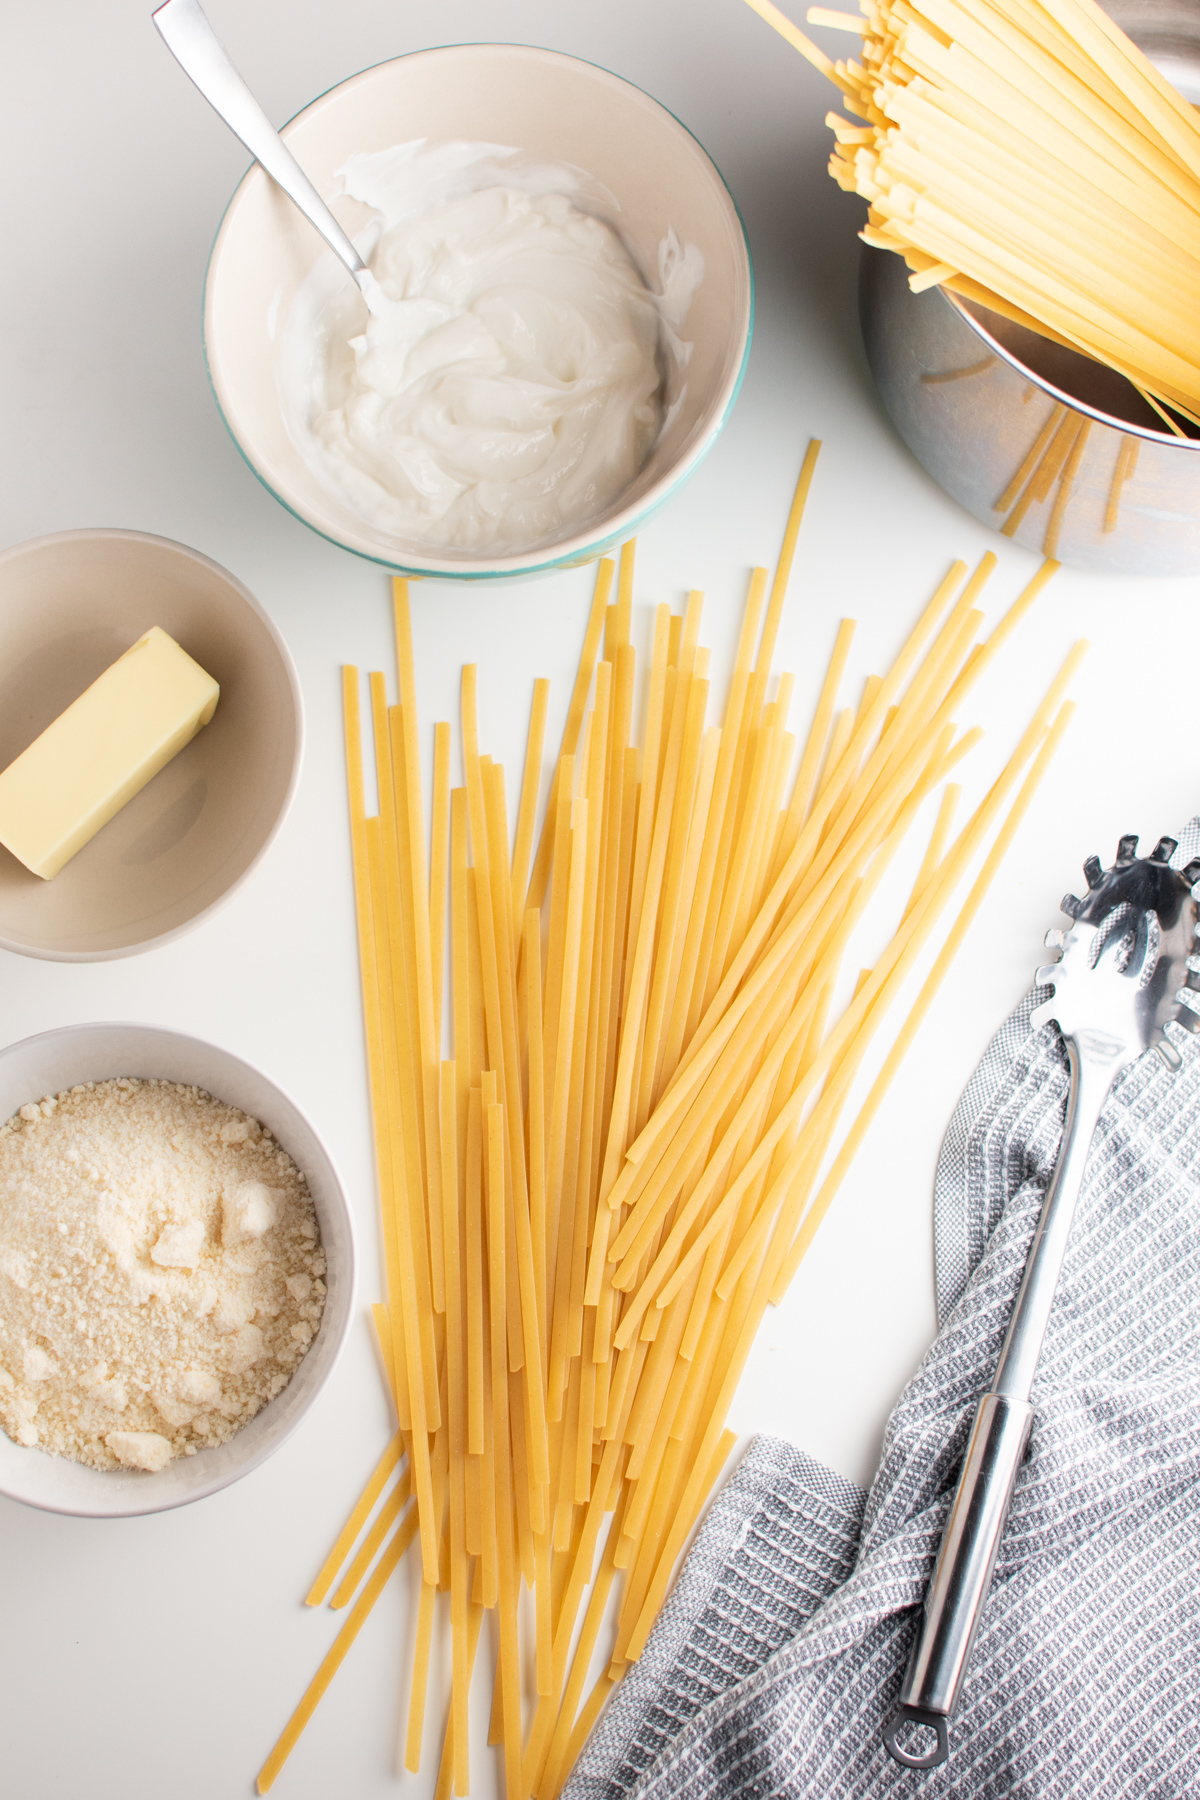 Healthy fettuccine alfredo ingredients including pasta, parmesan, butter and Greek yogurt.